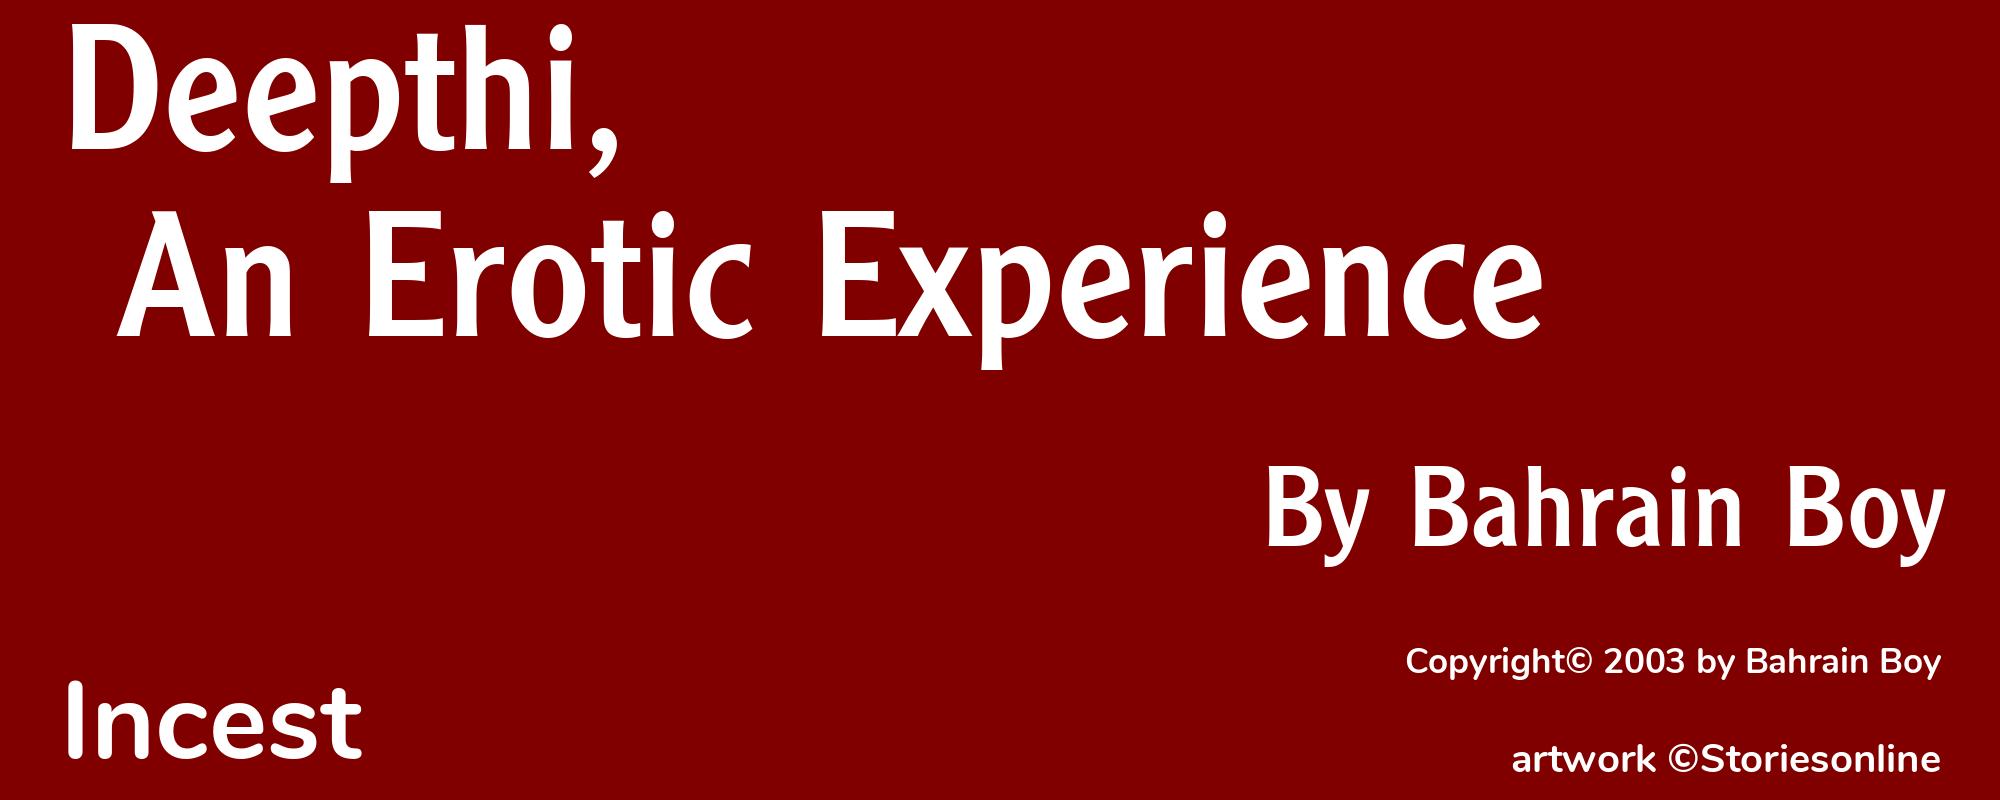 Deepthi, An Erotic Experience - Cover